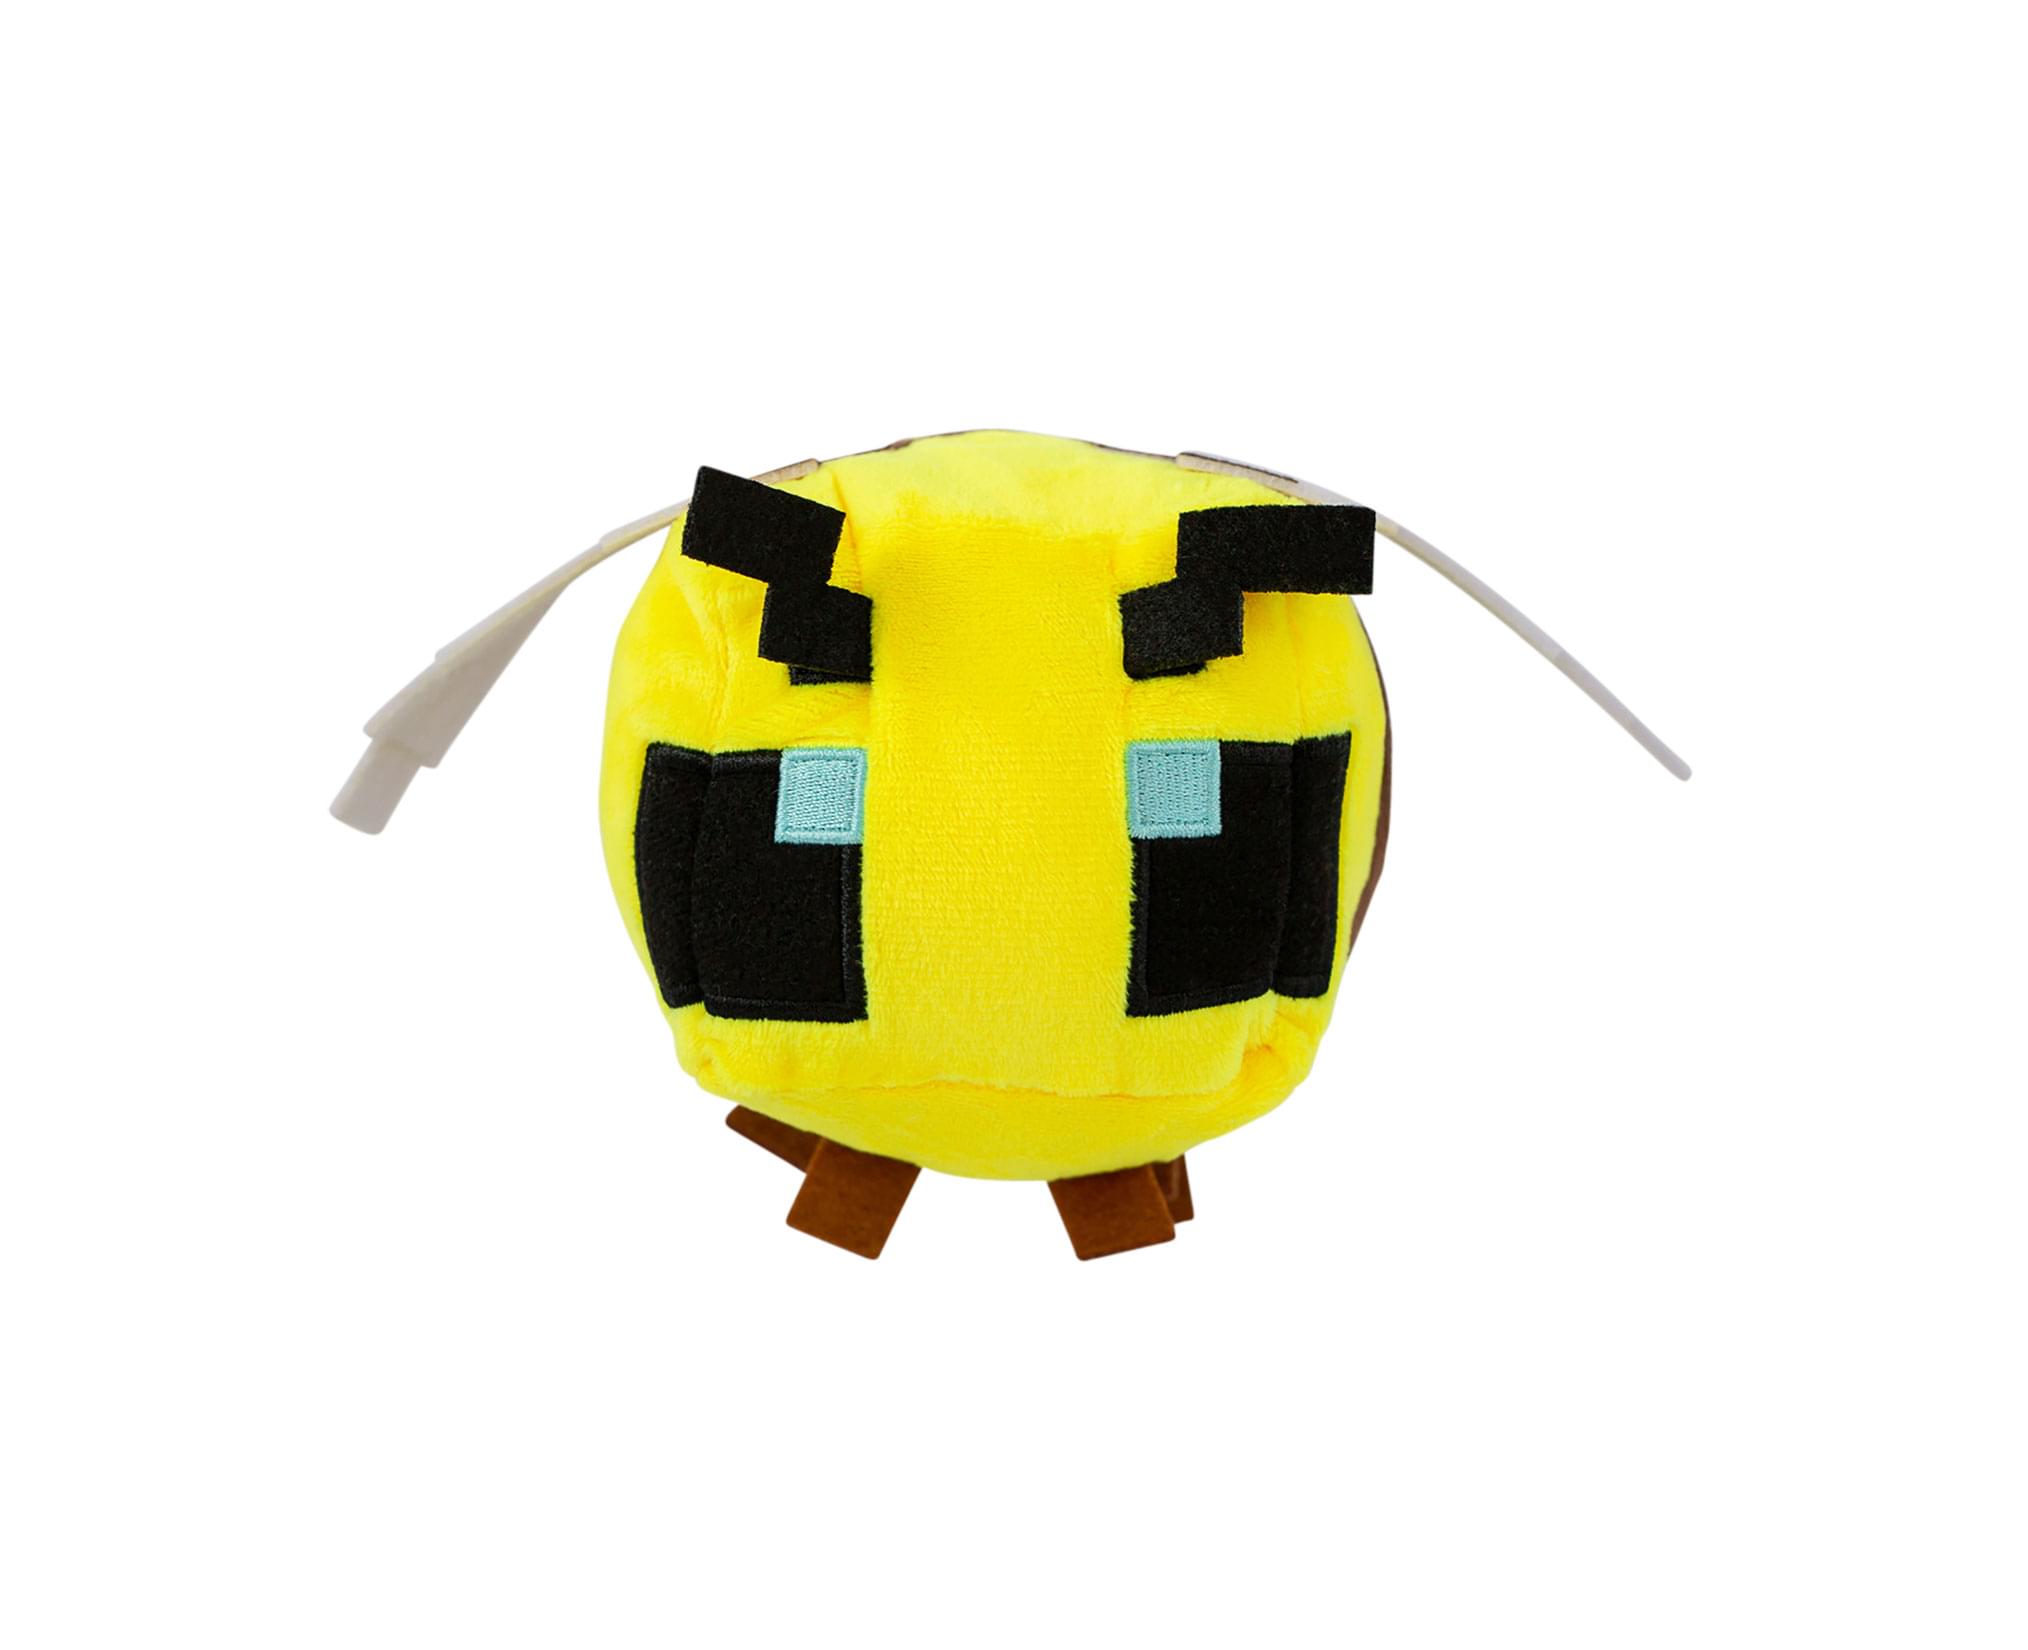 Minecraft Bee 3D Print Planter Cute Animal Plant Pot 